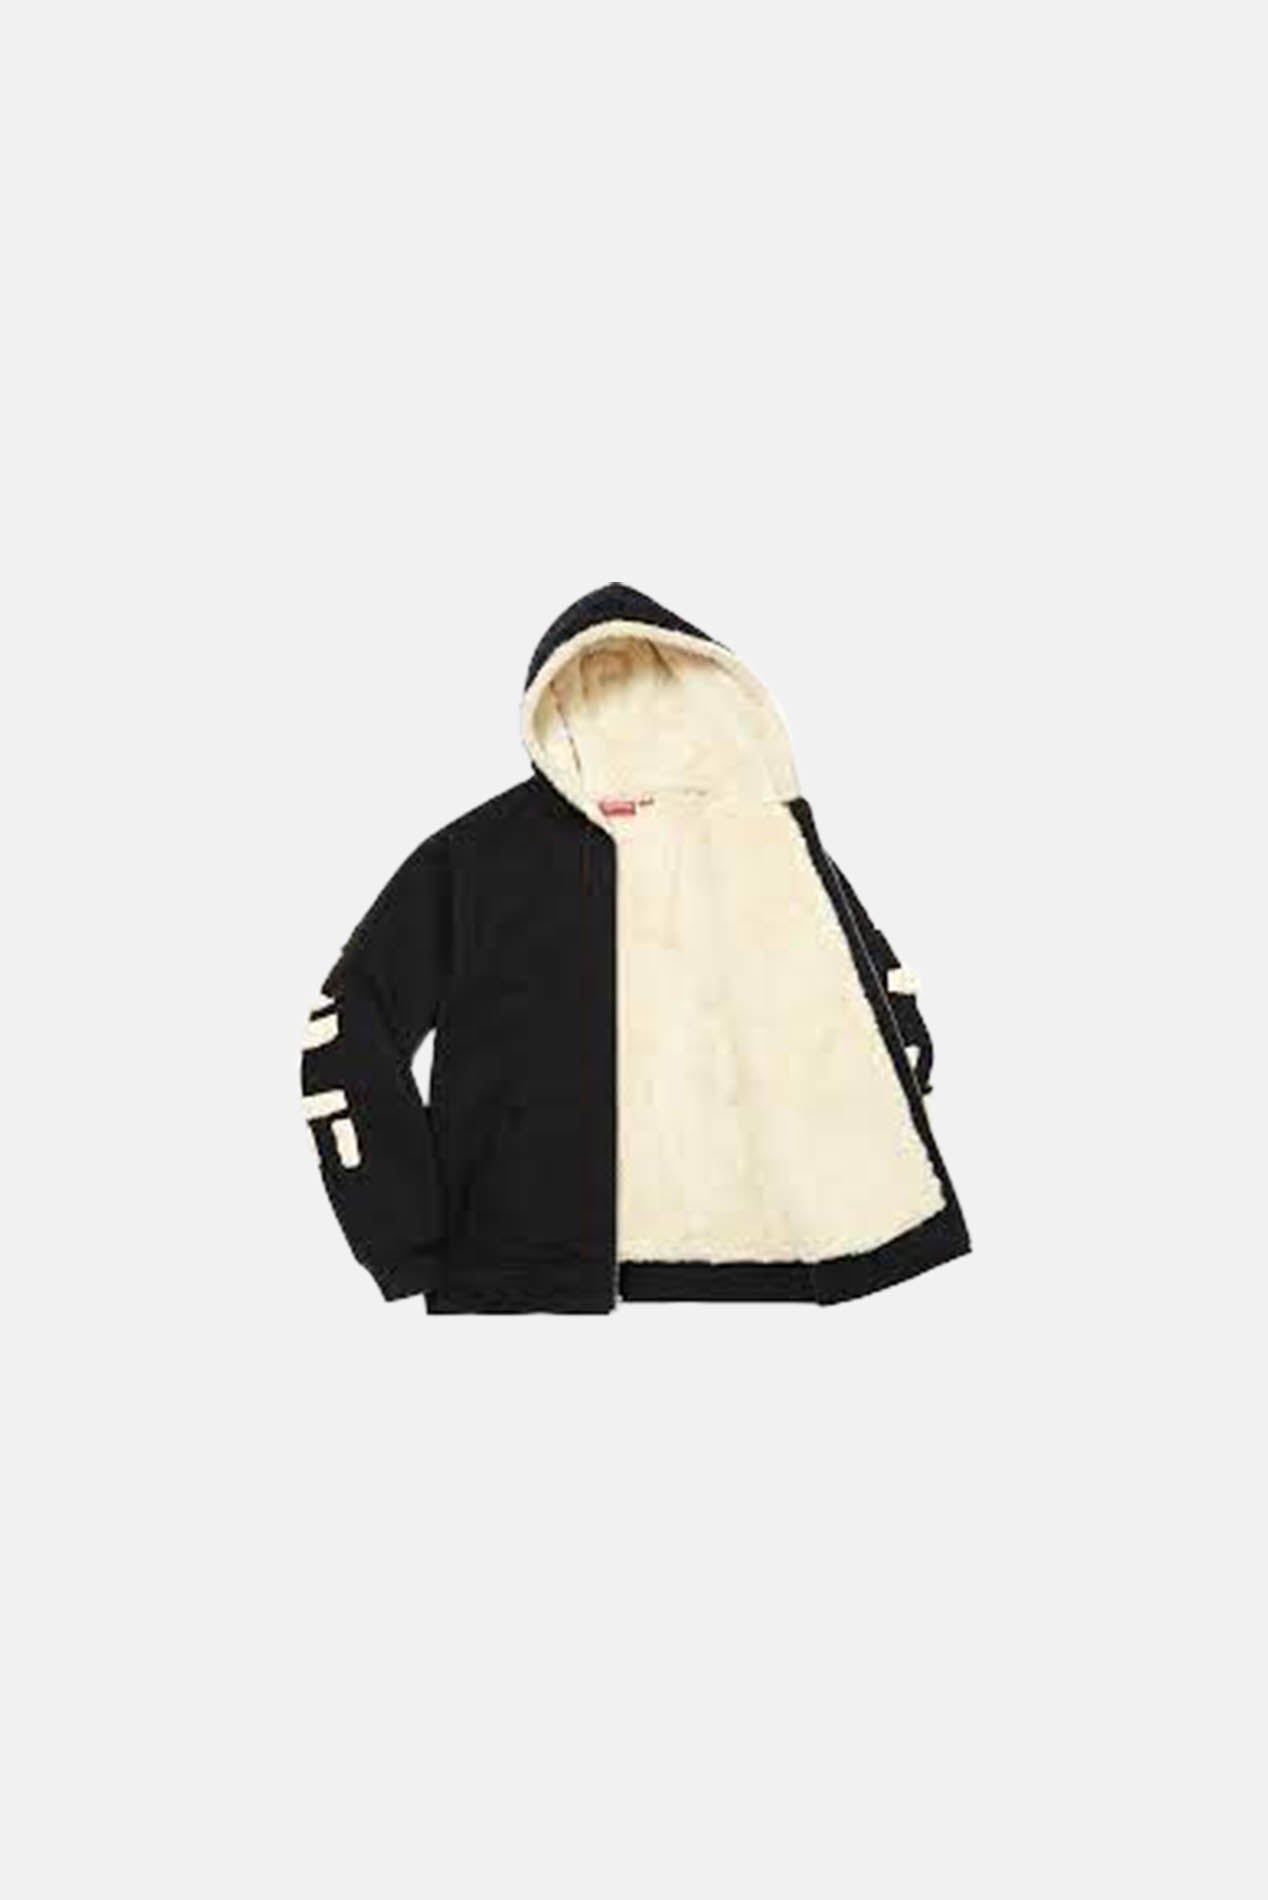 Buy Supreme S Logo Zip Up Hooded Sweatshirt 'Black' - FW23SW42